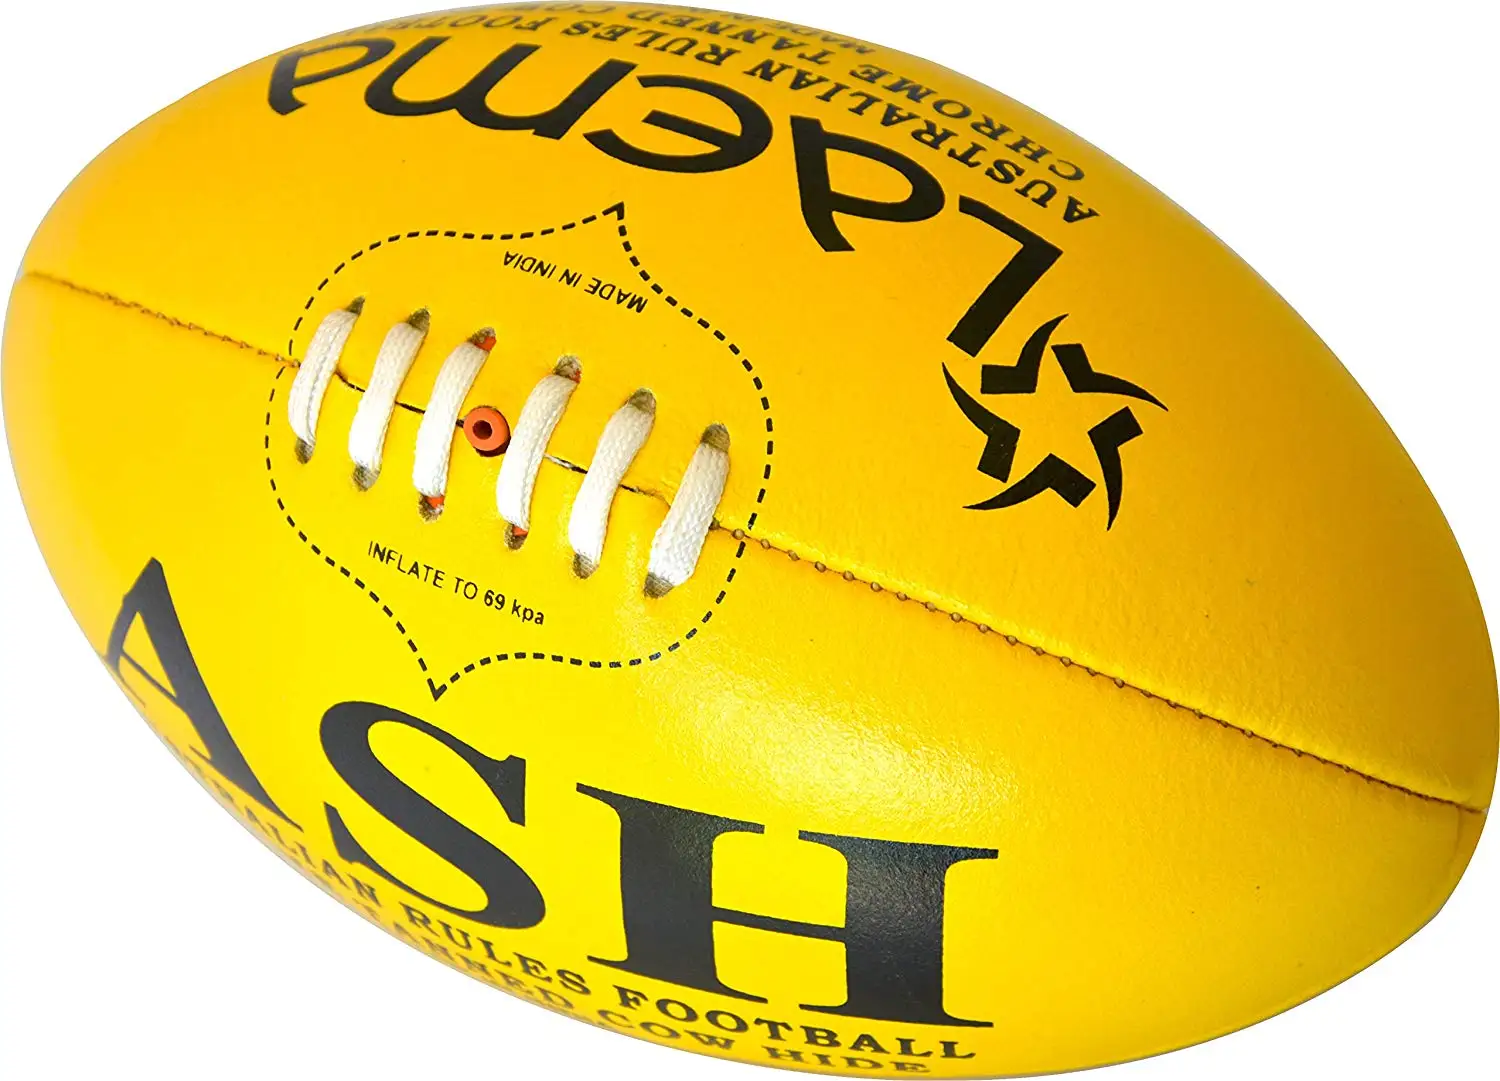 Австралийский футбол мяч. Hungry Yellow Ball. Australia Ball. Aussie Rules Footy. Match quality